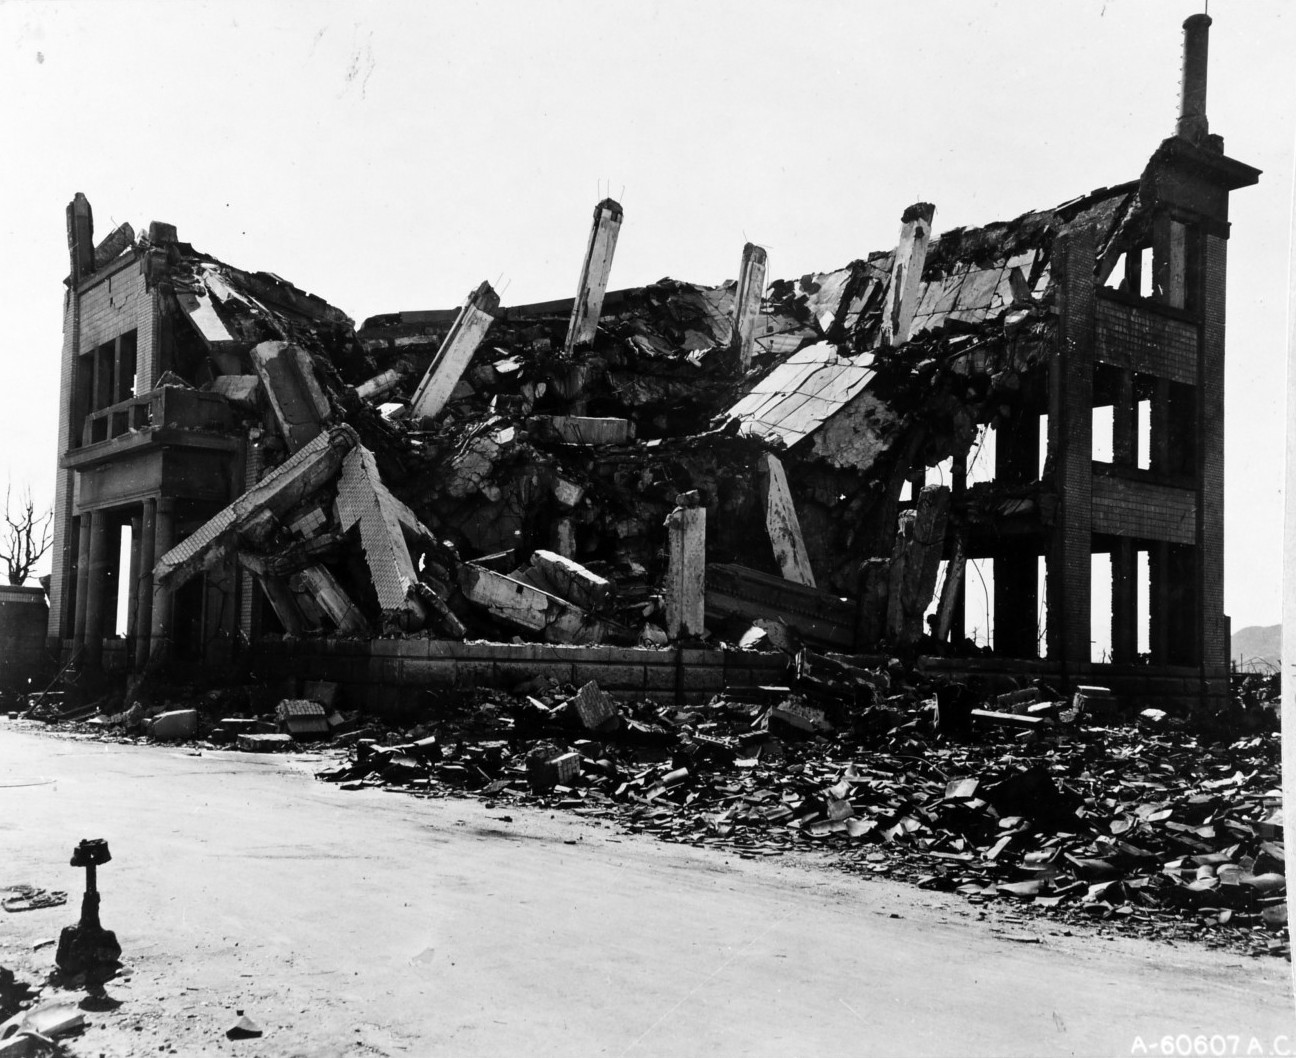 Destroyed Chugoku Coal Distribution Company building in Hiroshima, Japan, 8 Nov 1945, photo 1 of 3